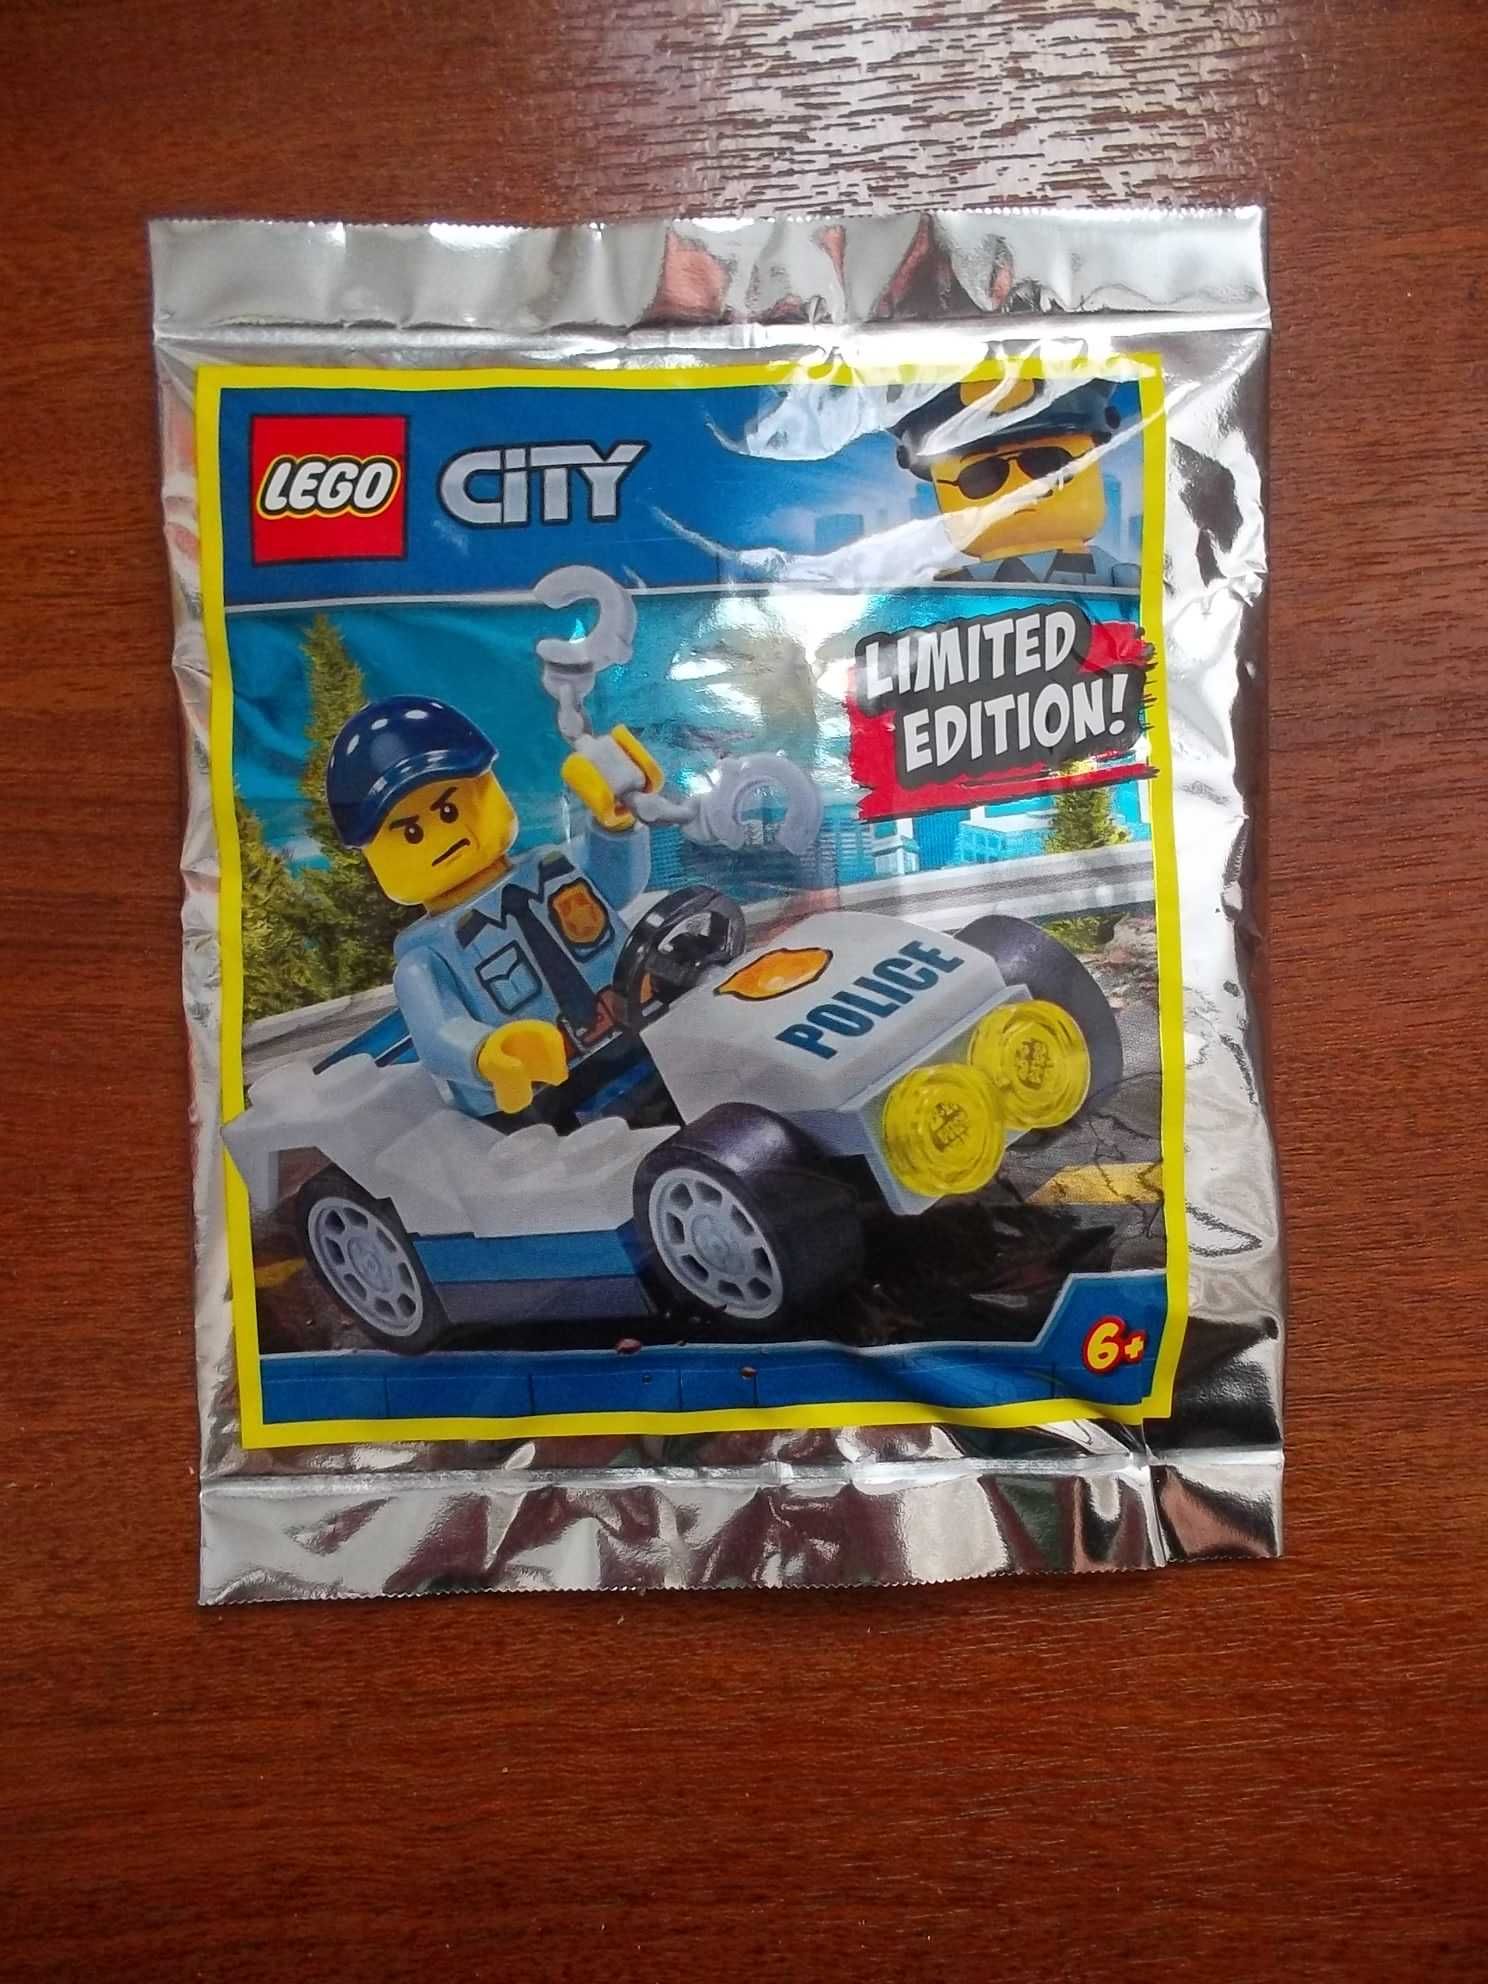 Polybags Lego - Policia ou Jardineiro